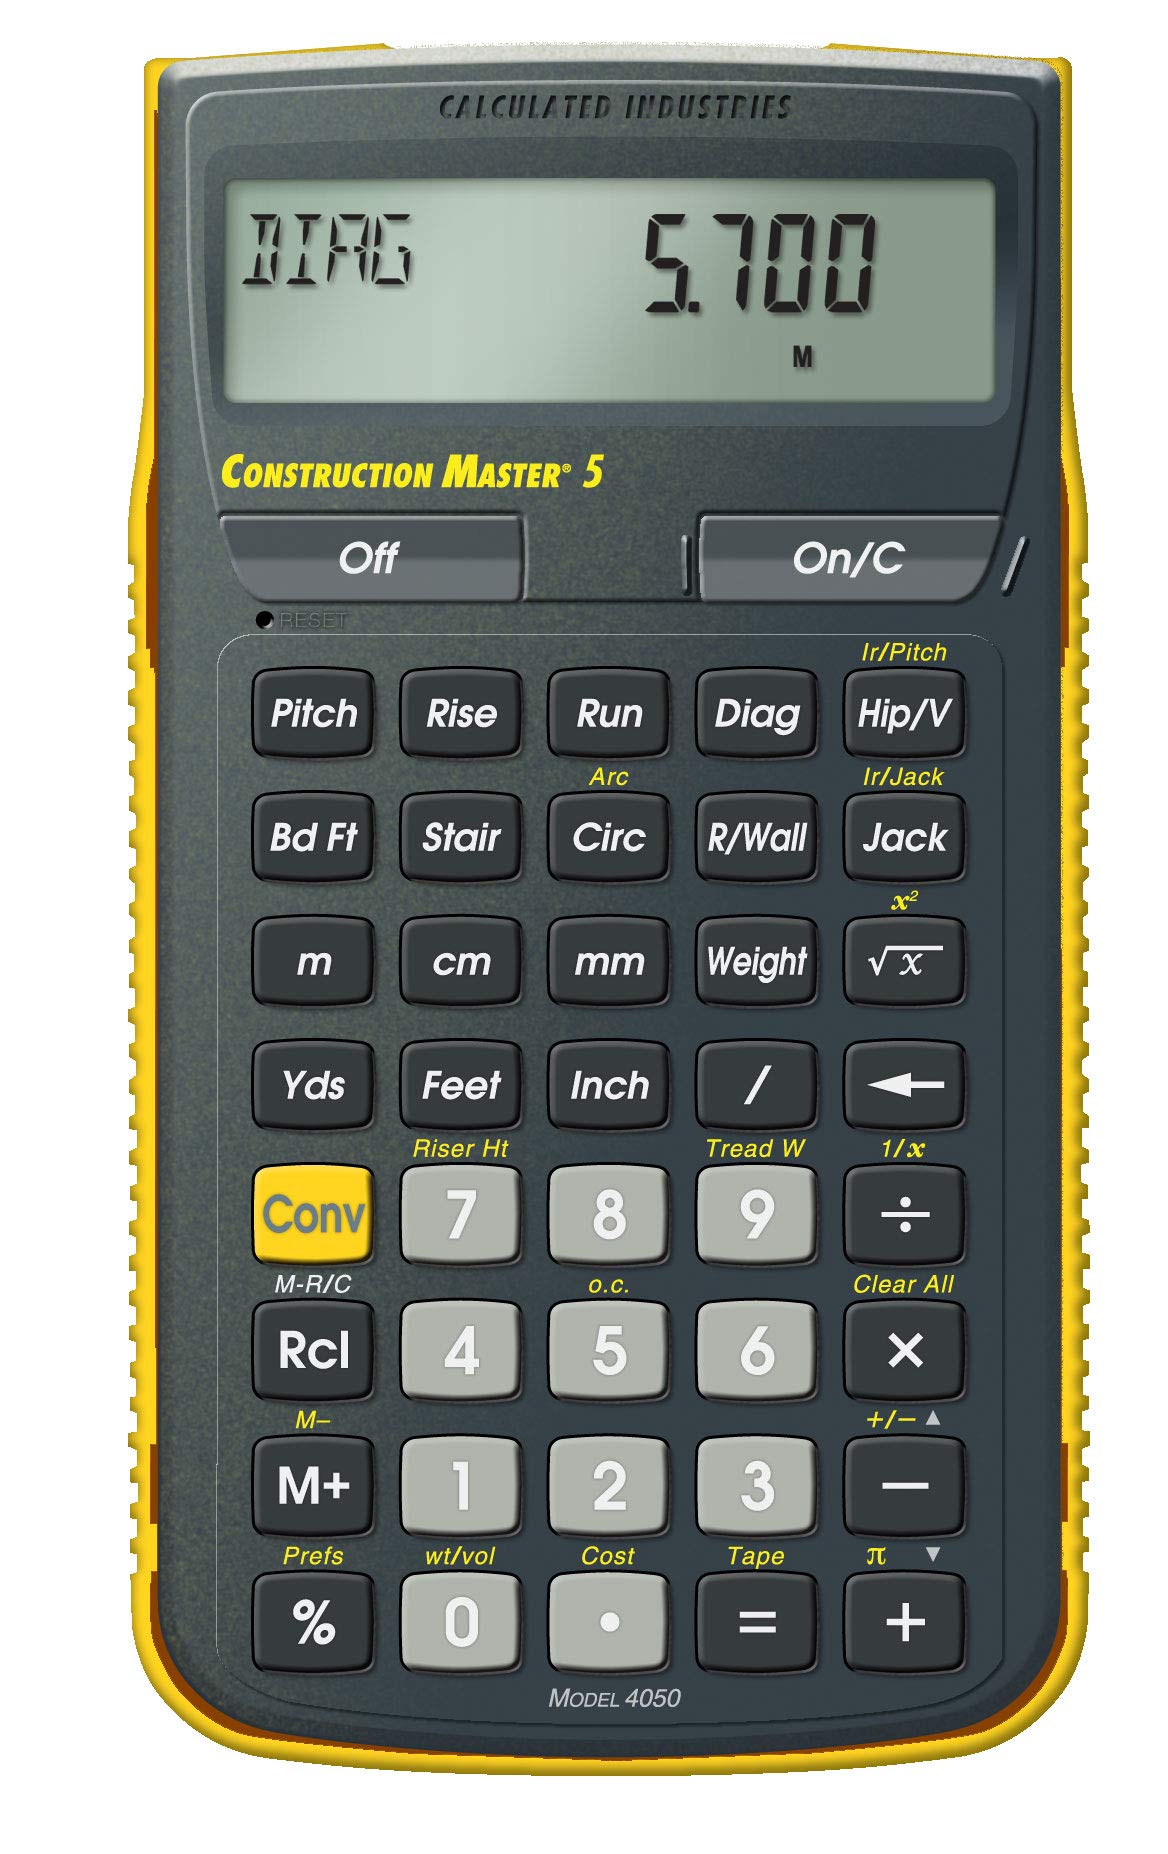 Calculated Industries 4050 Construction Master 5 Calculatrice de construction